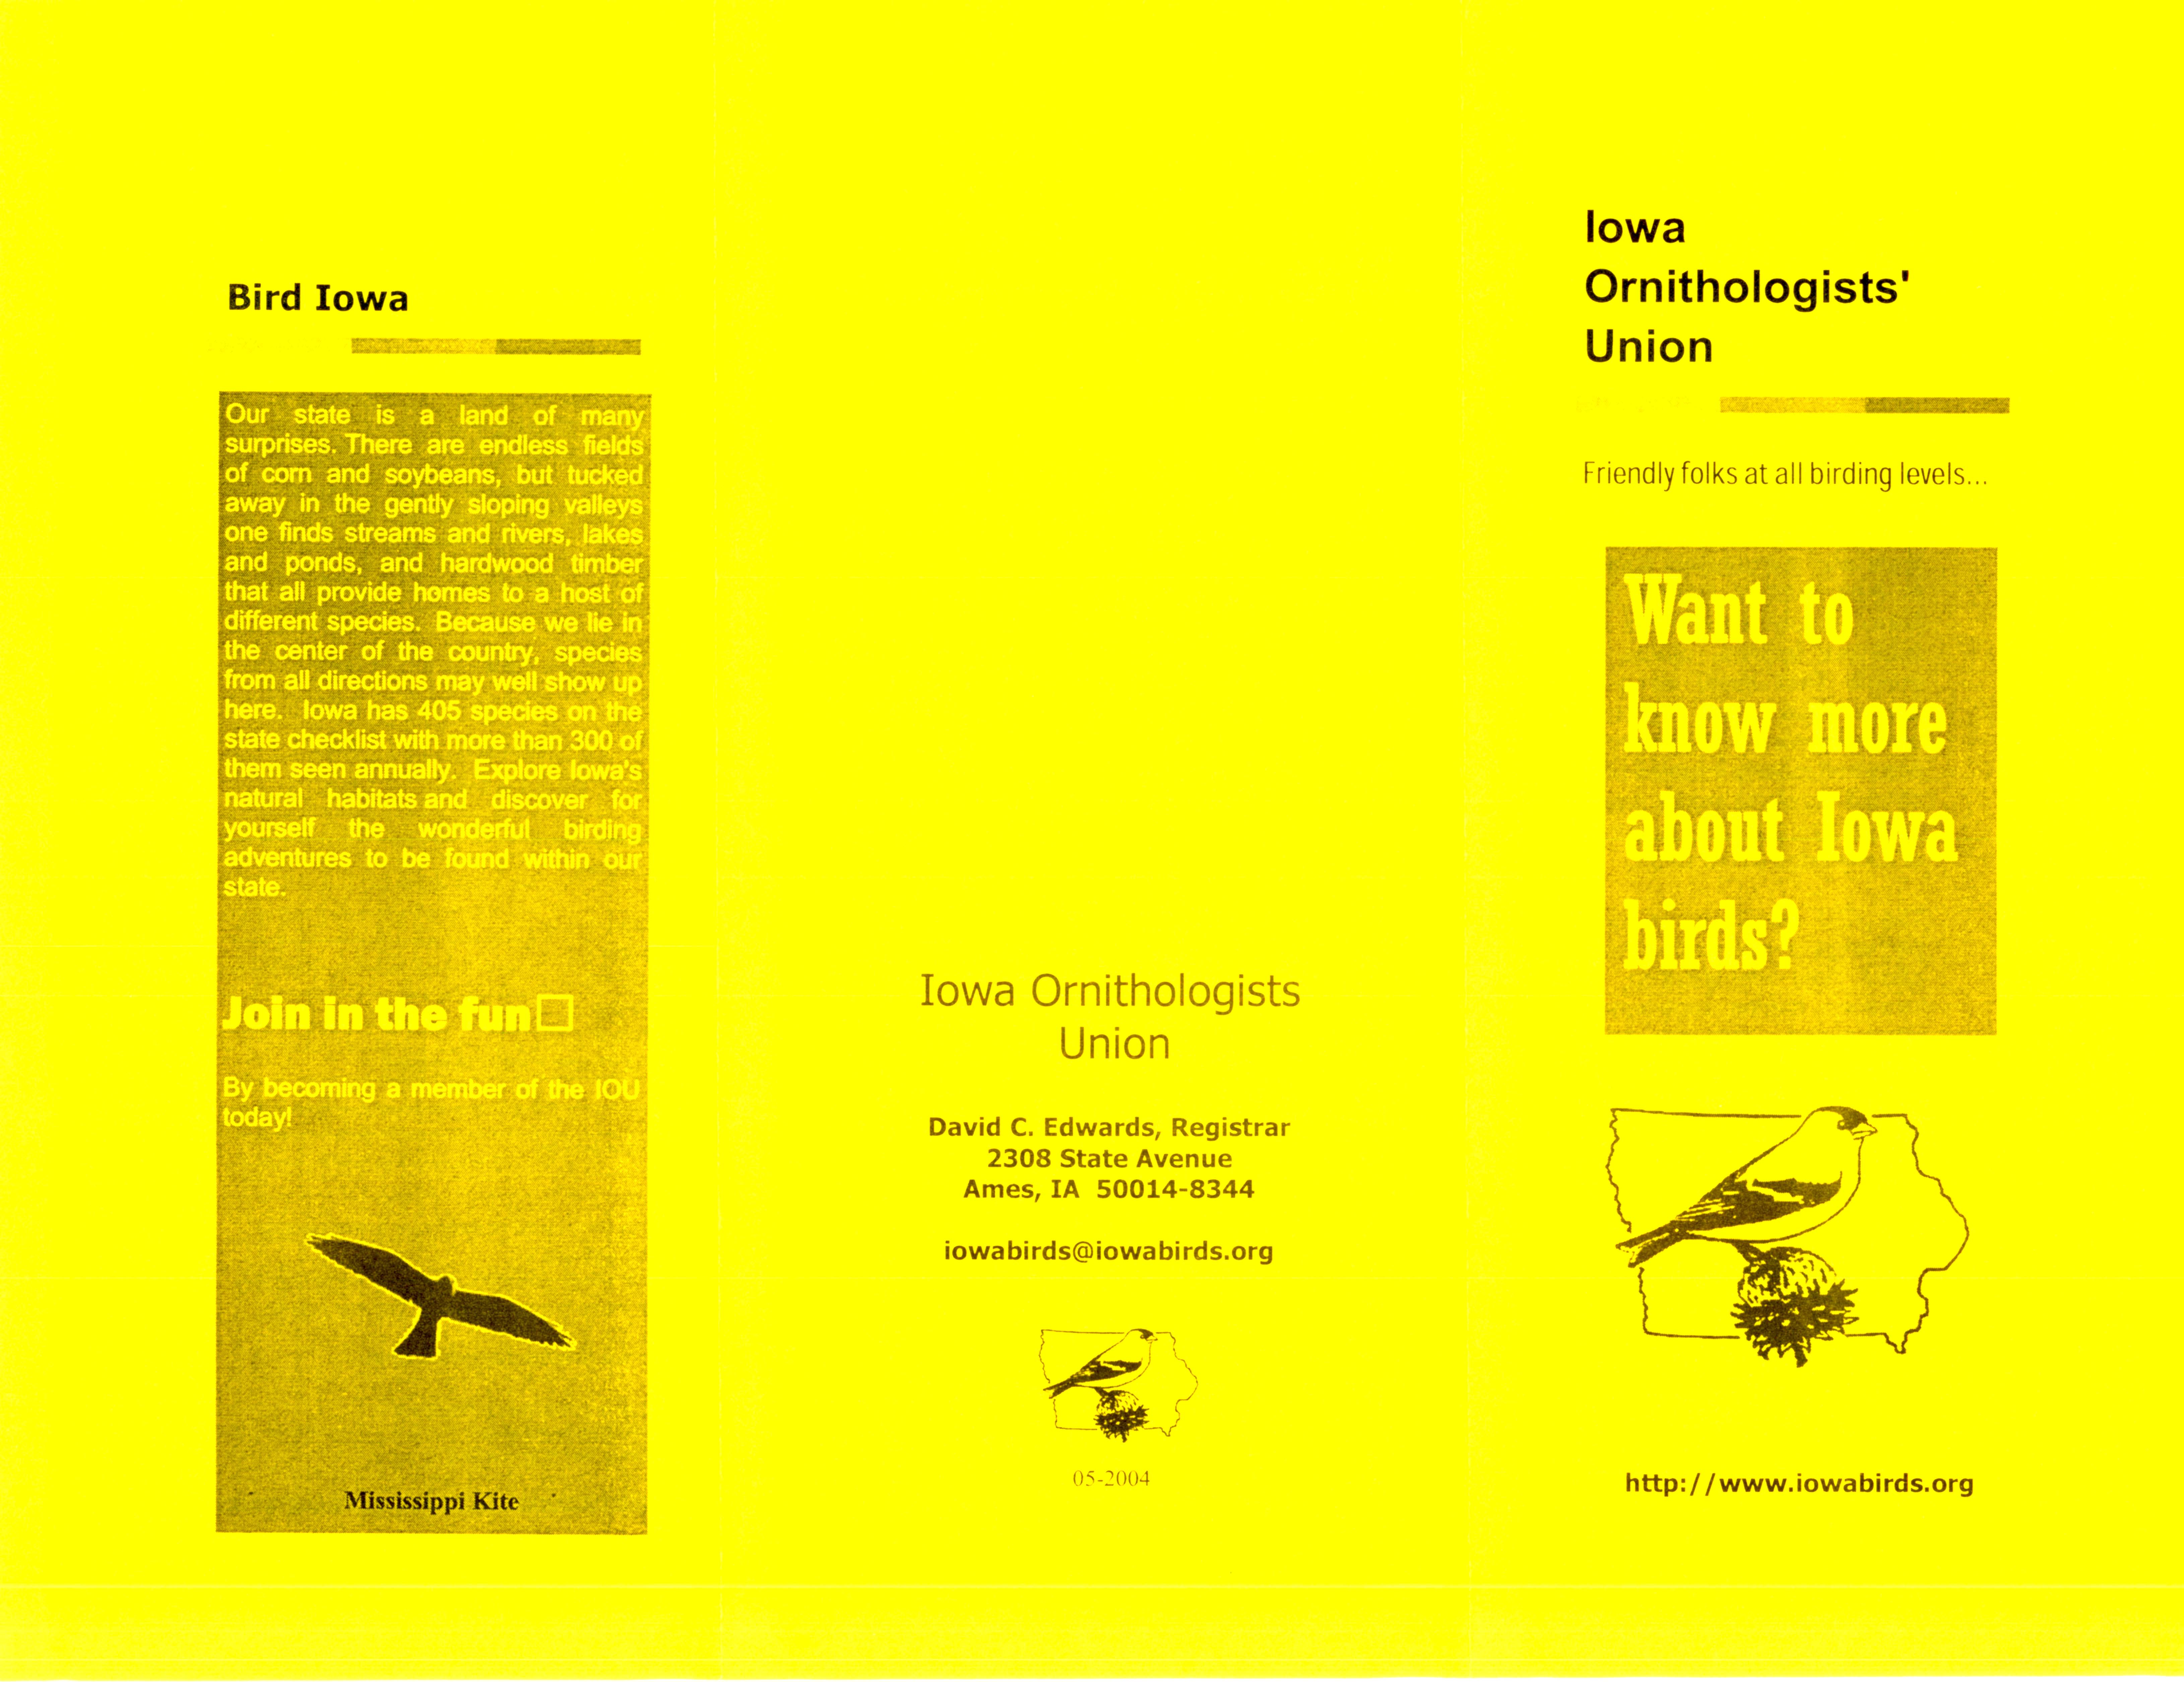 Iowa Ornithologists' Union brochure